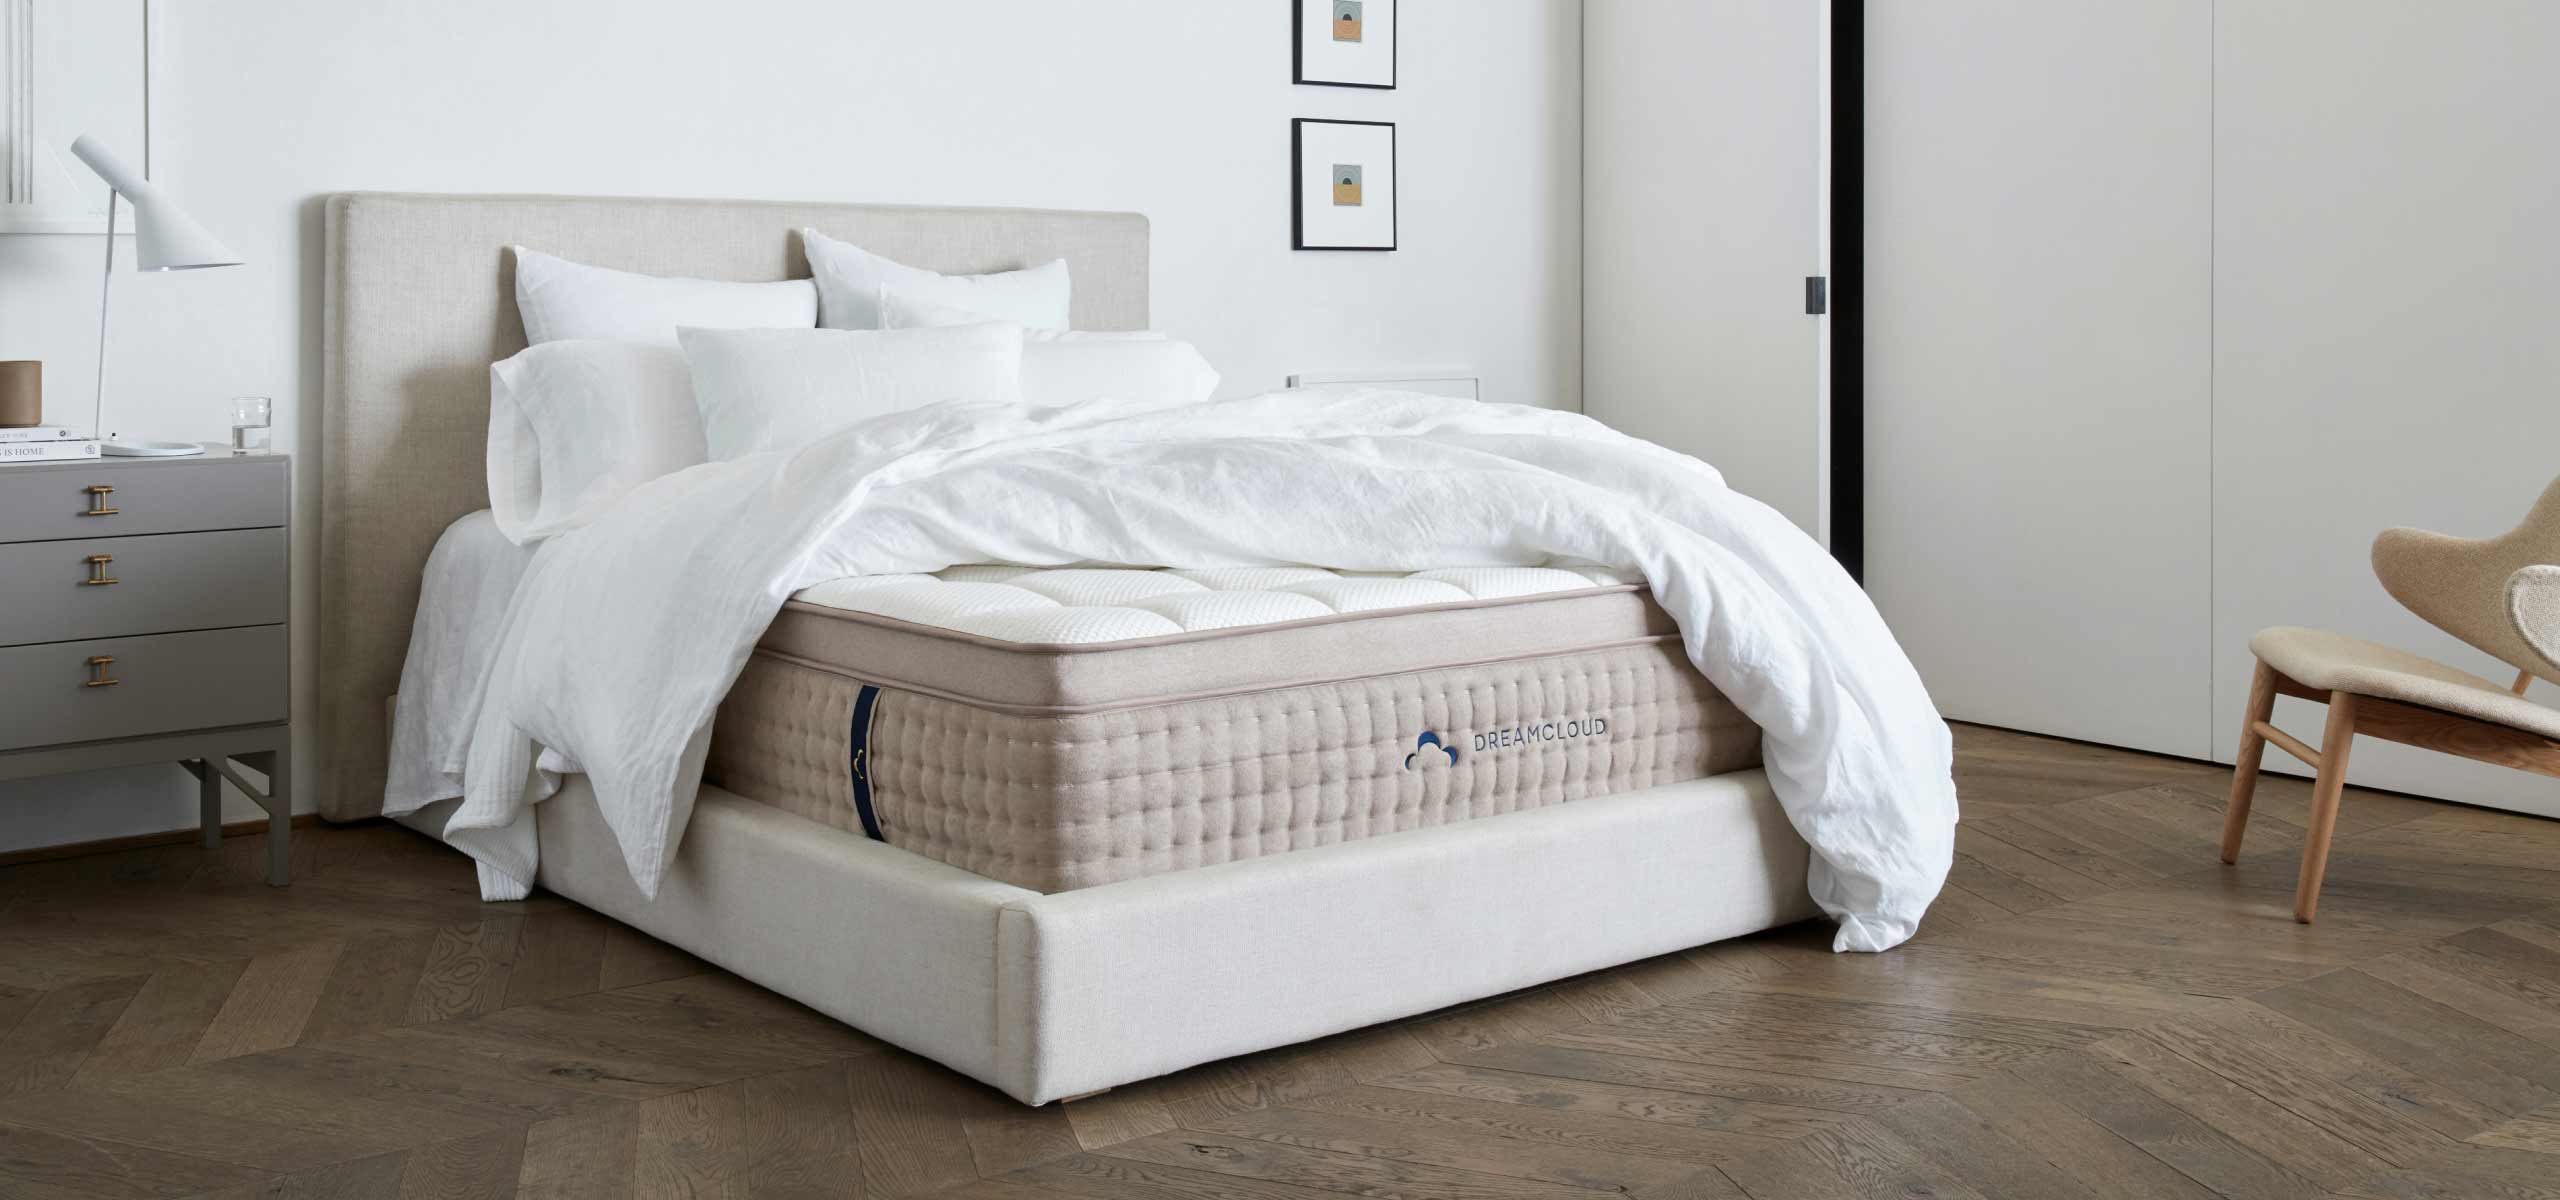 dreamcloud mattress in the room image